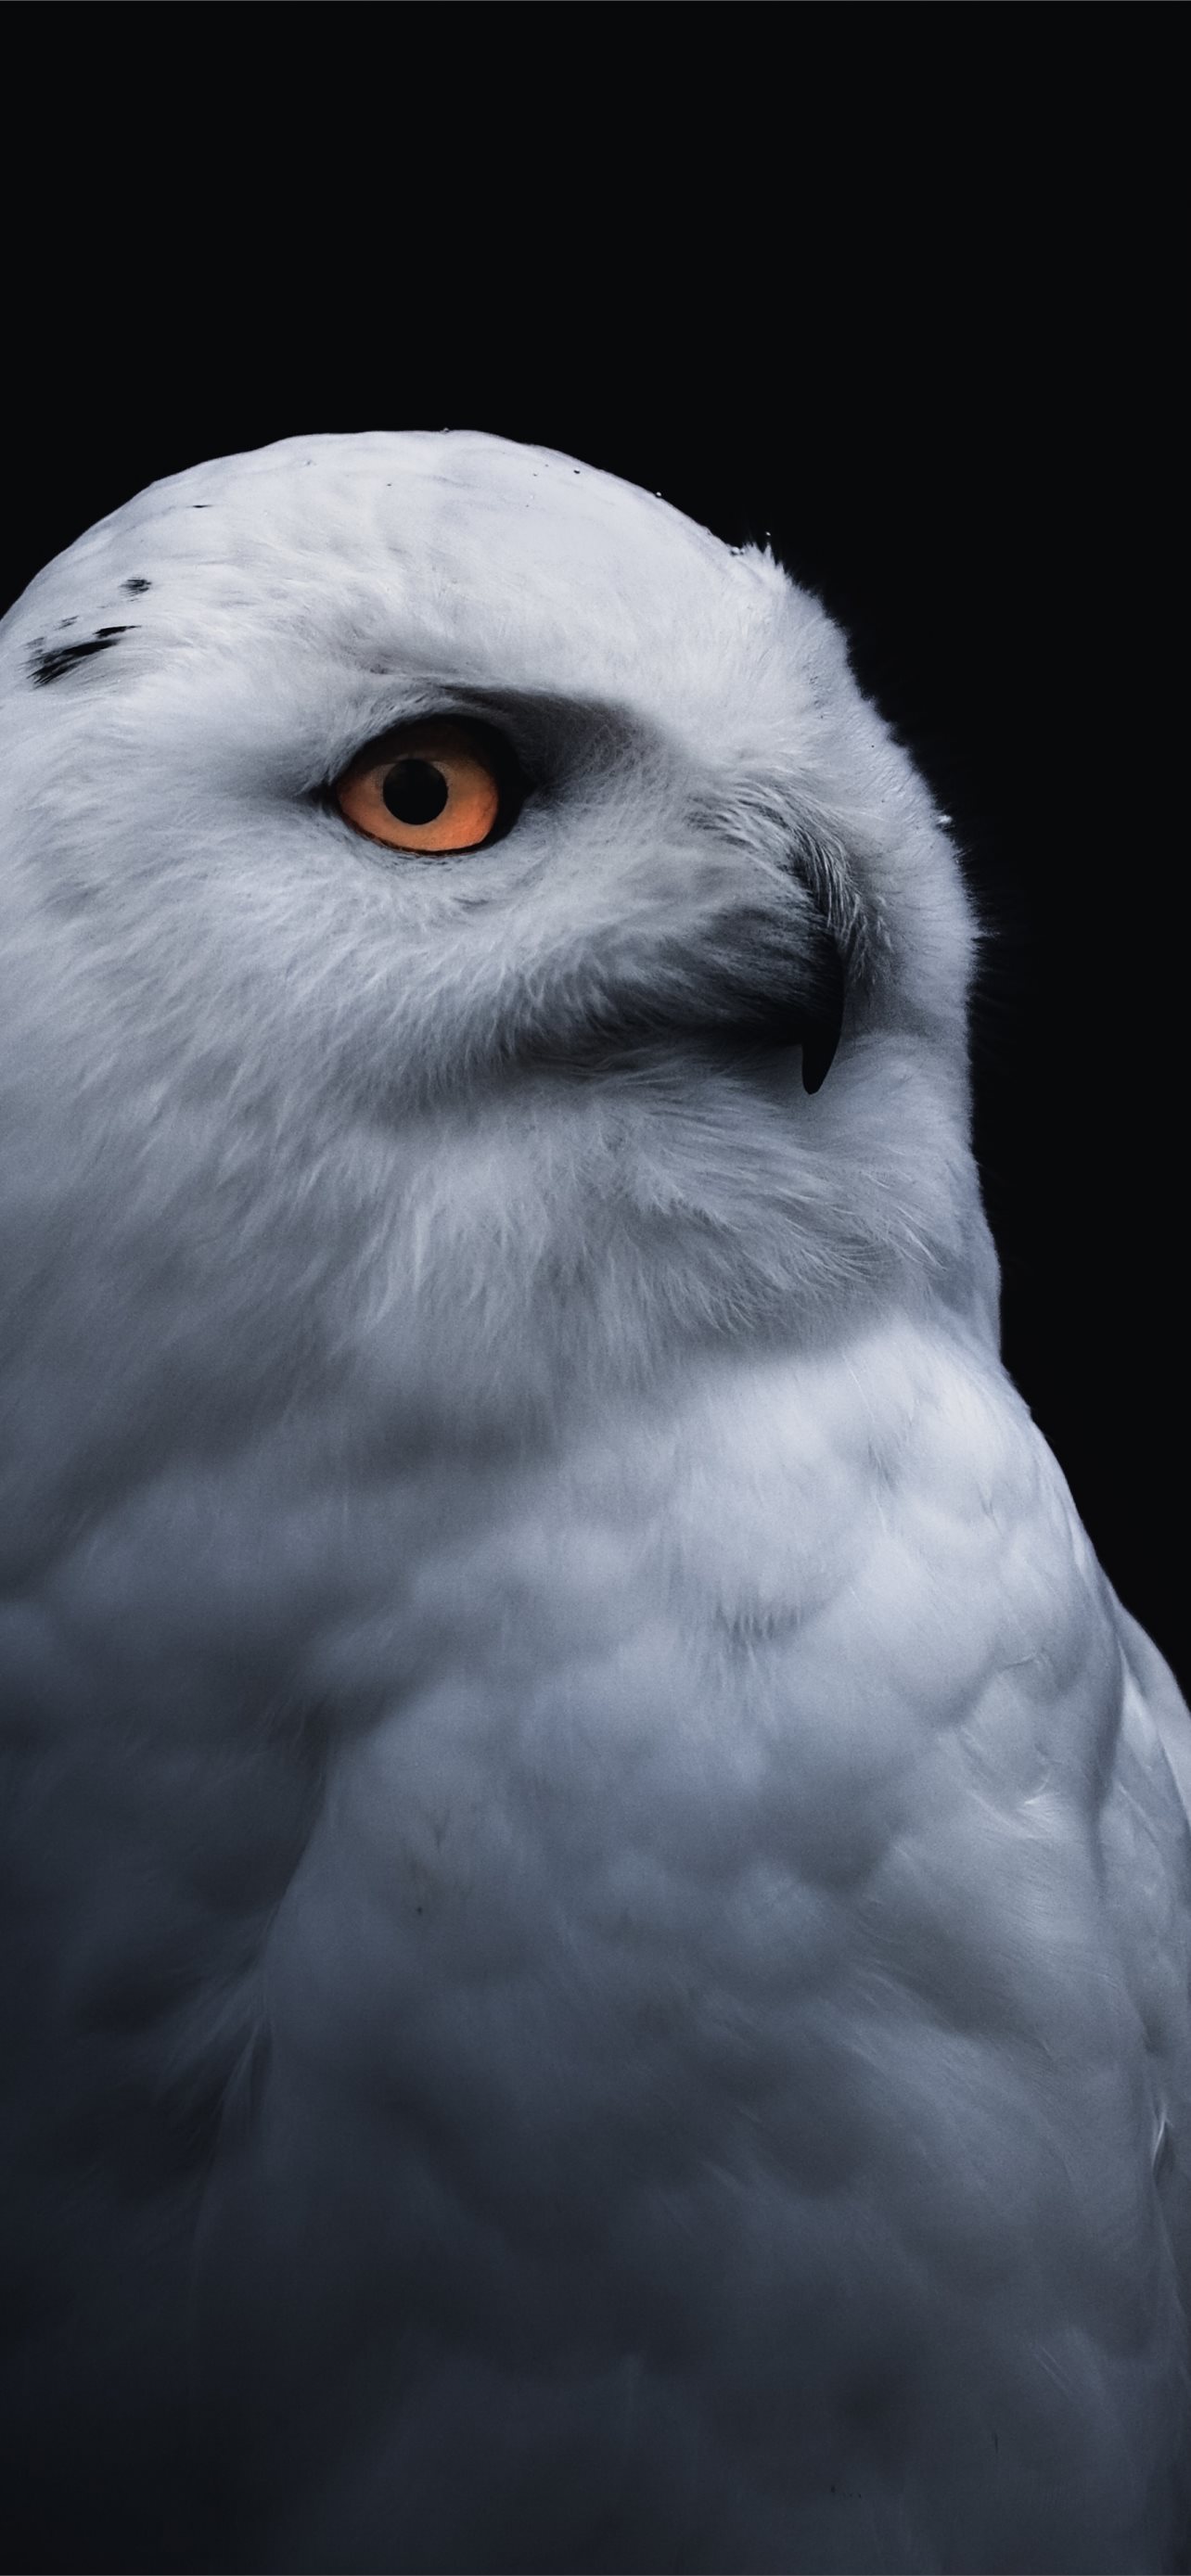 yellow eye bird white owl lg v30 lg g6 HD image ba. iPhone Wallpaper Free Download